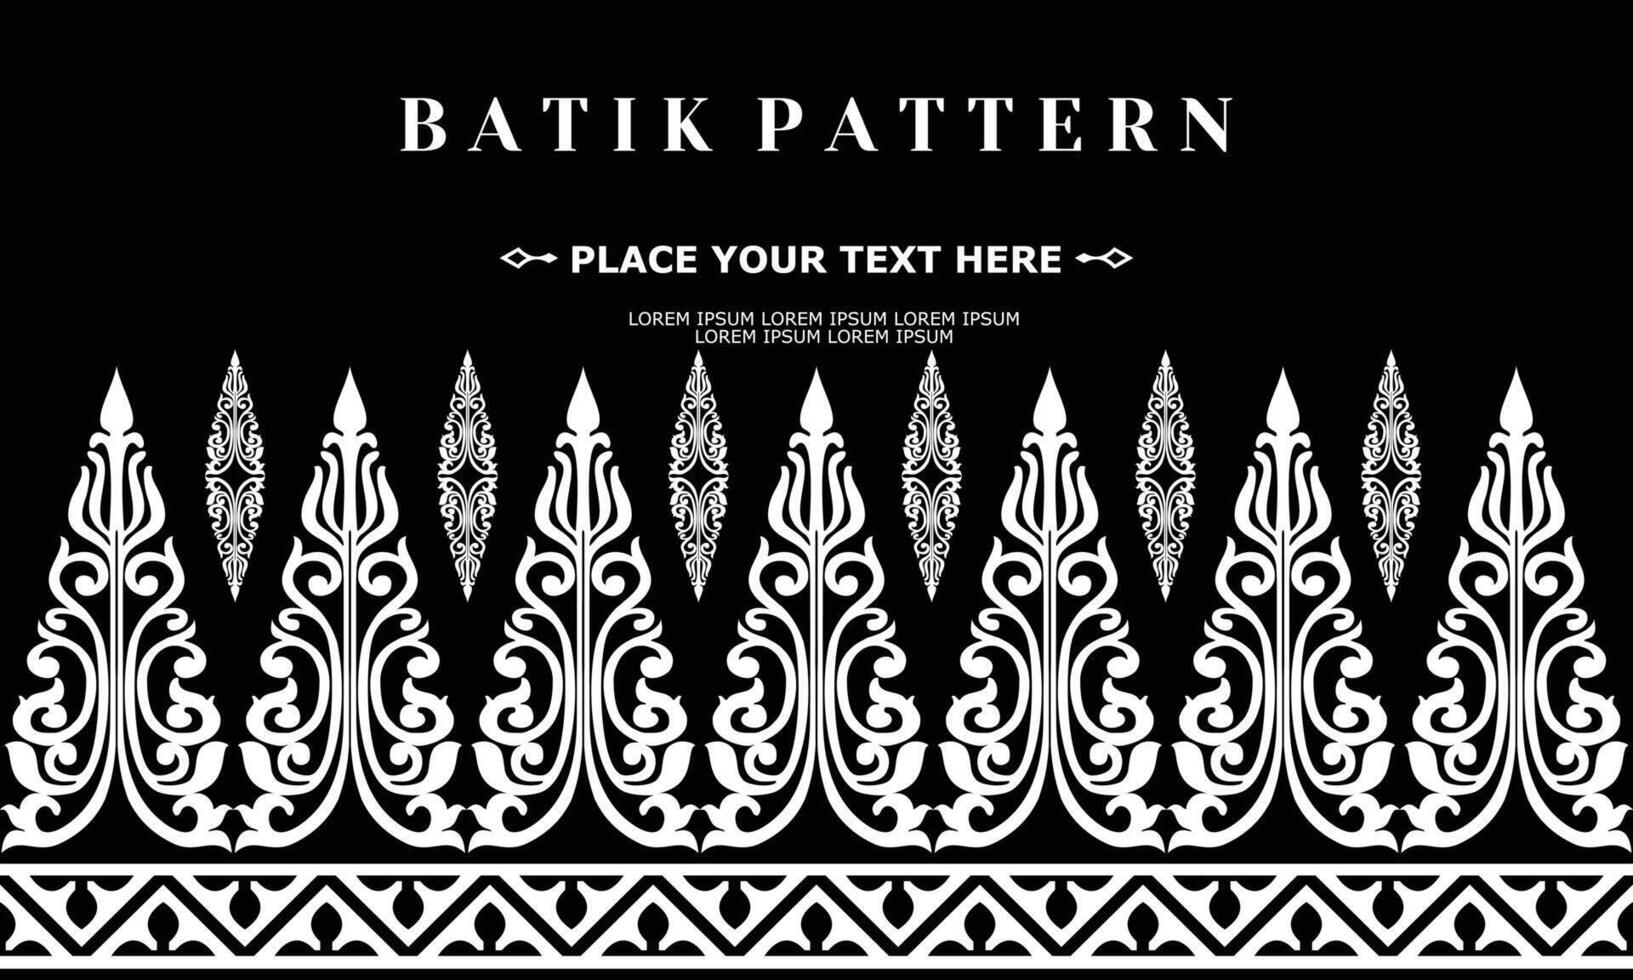 Vektor Luxus und elegant traditionell Batik Ornament Muster